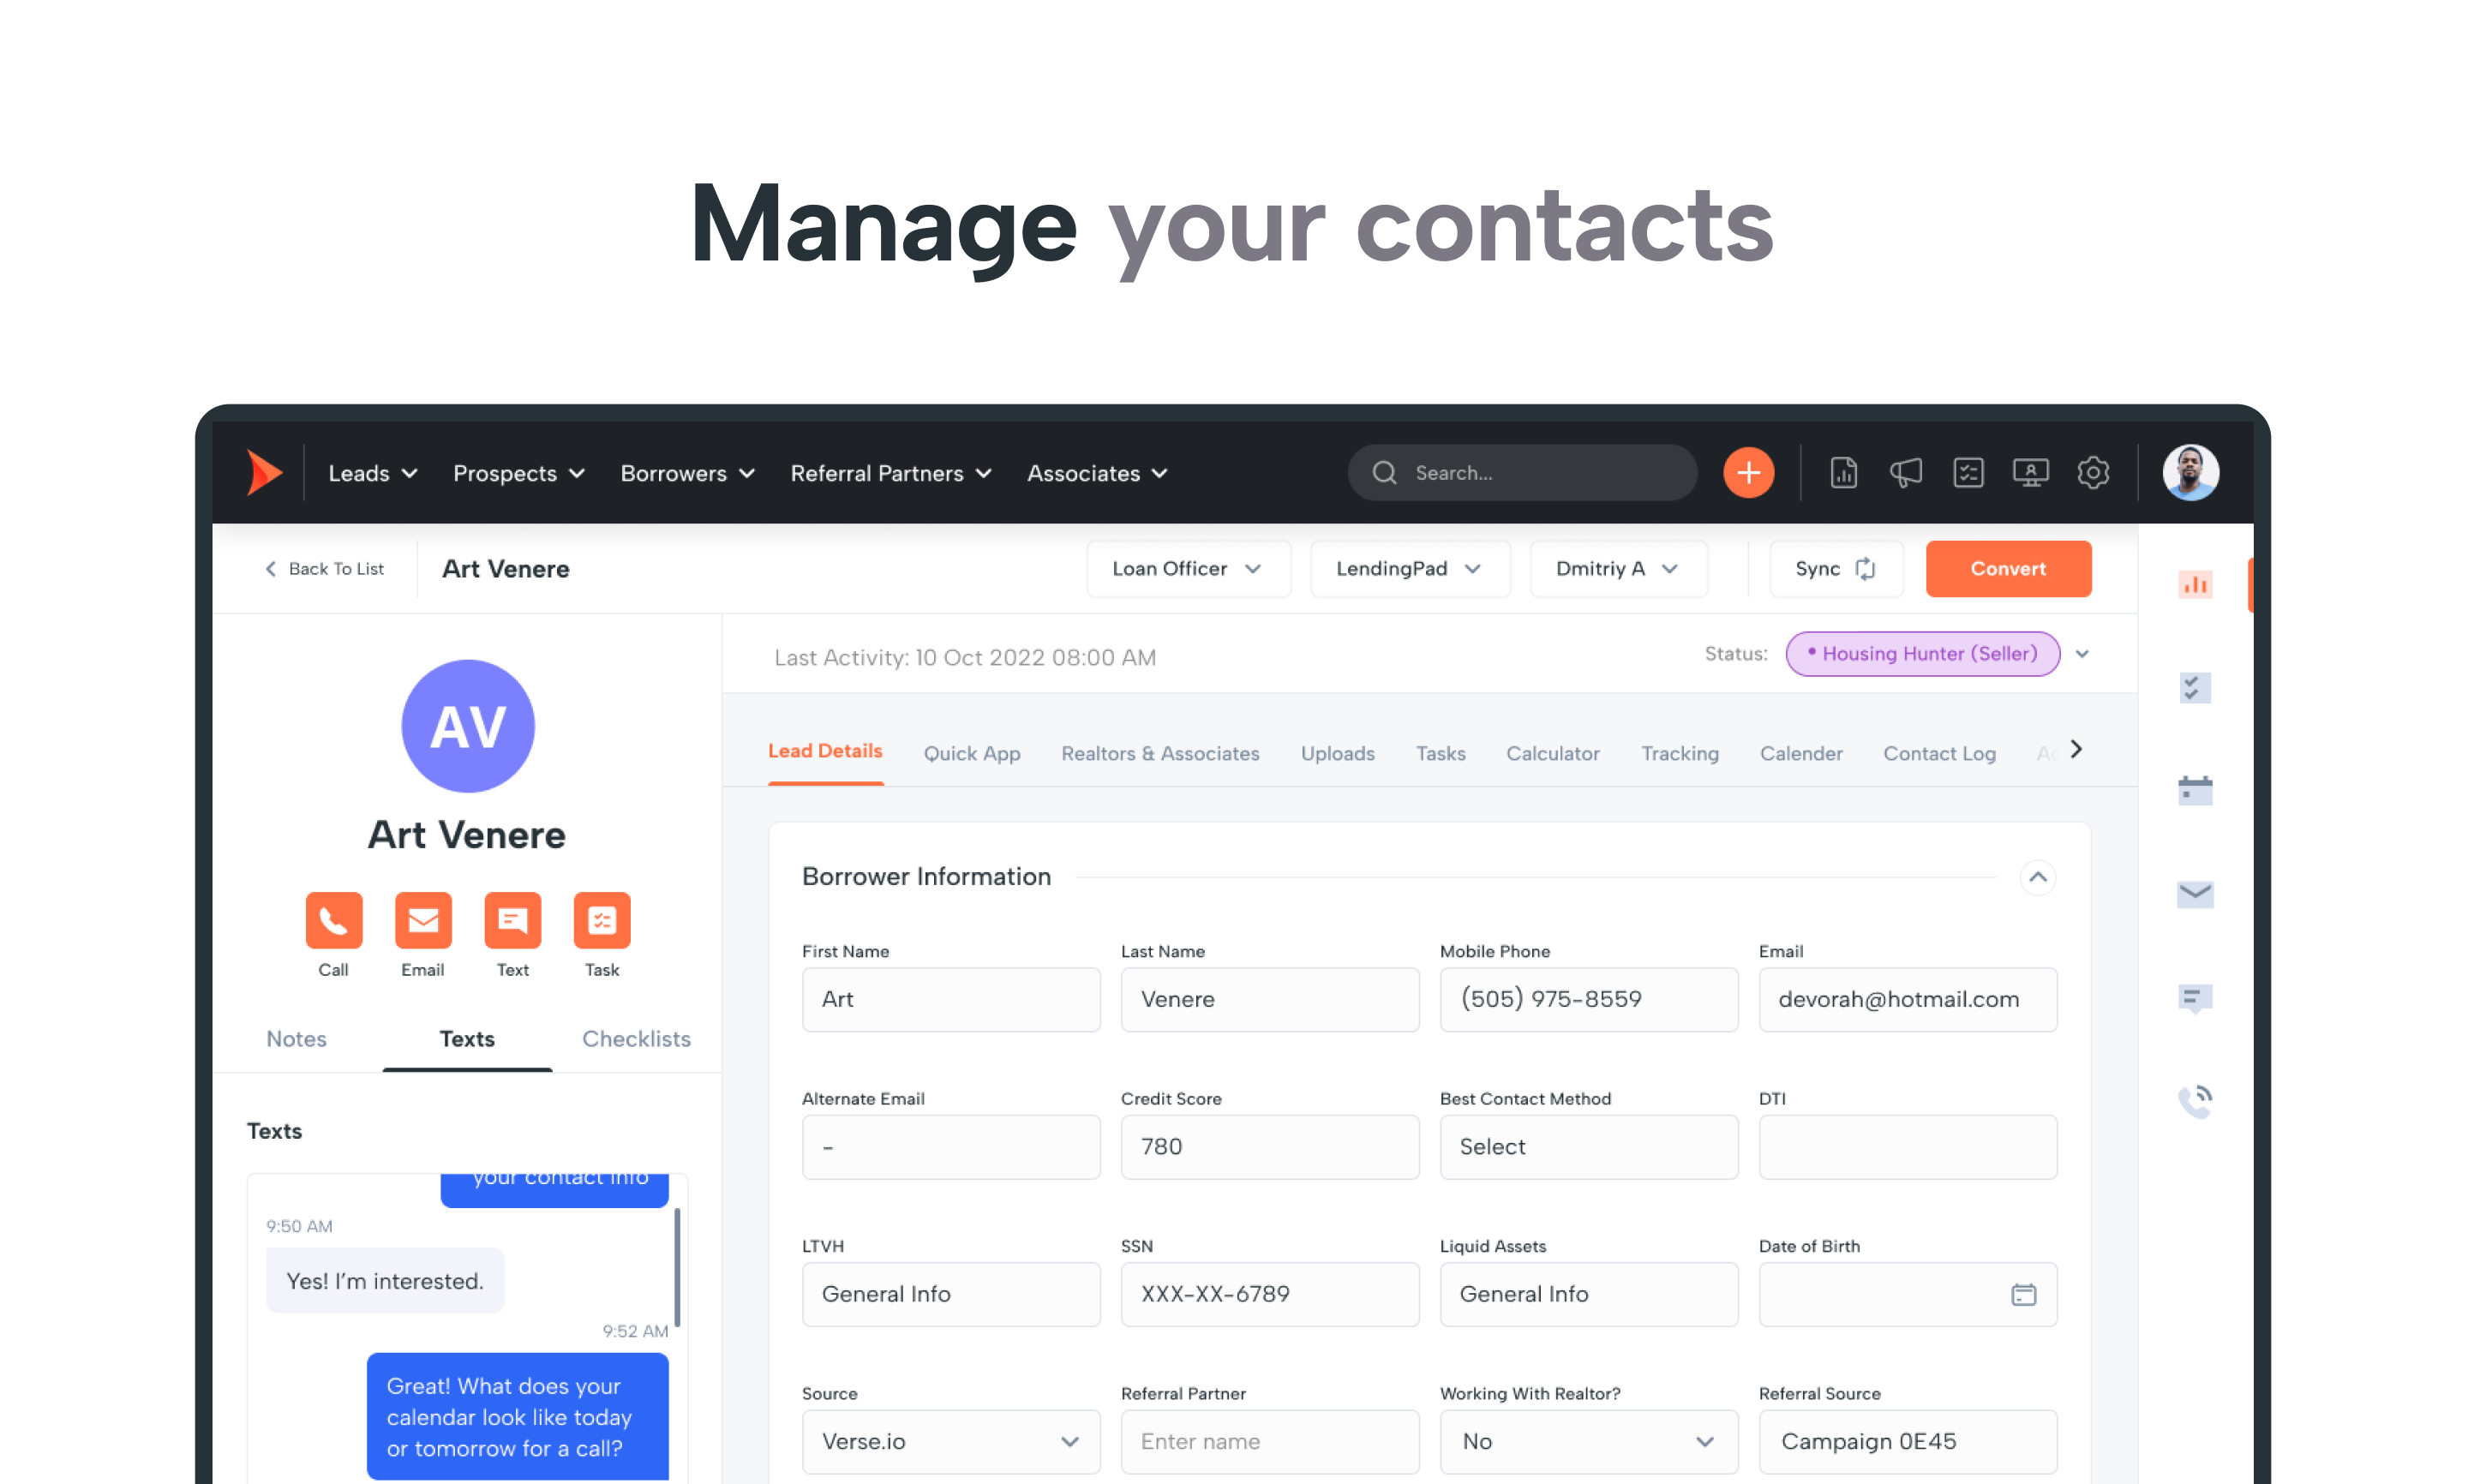 Contact Management